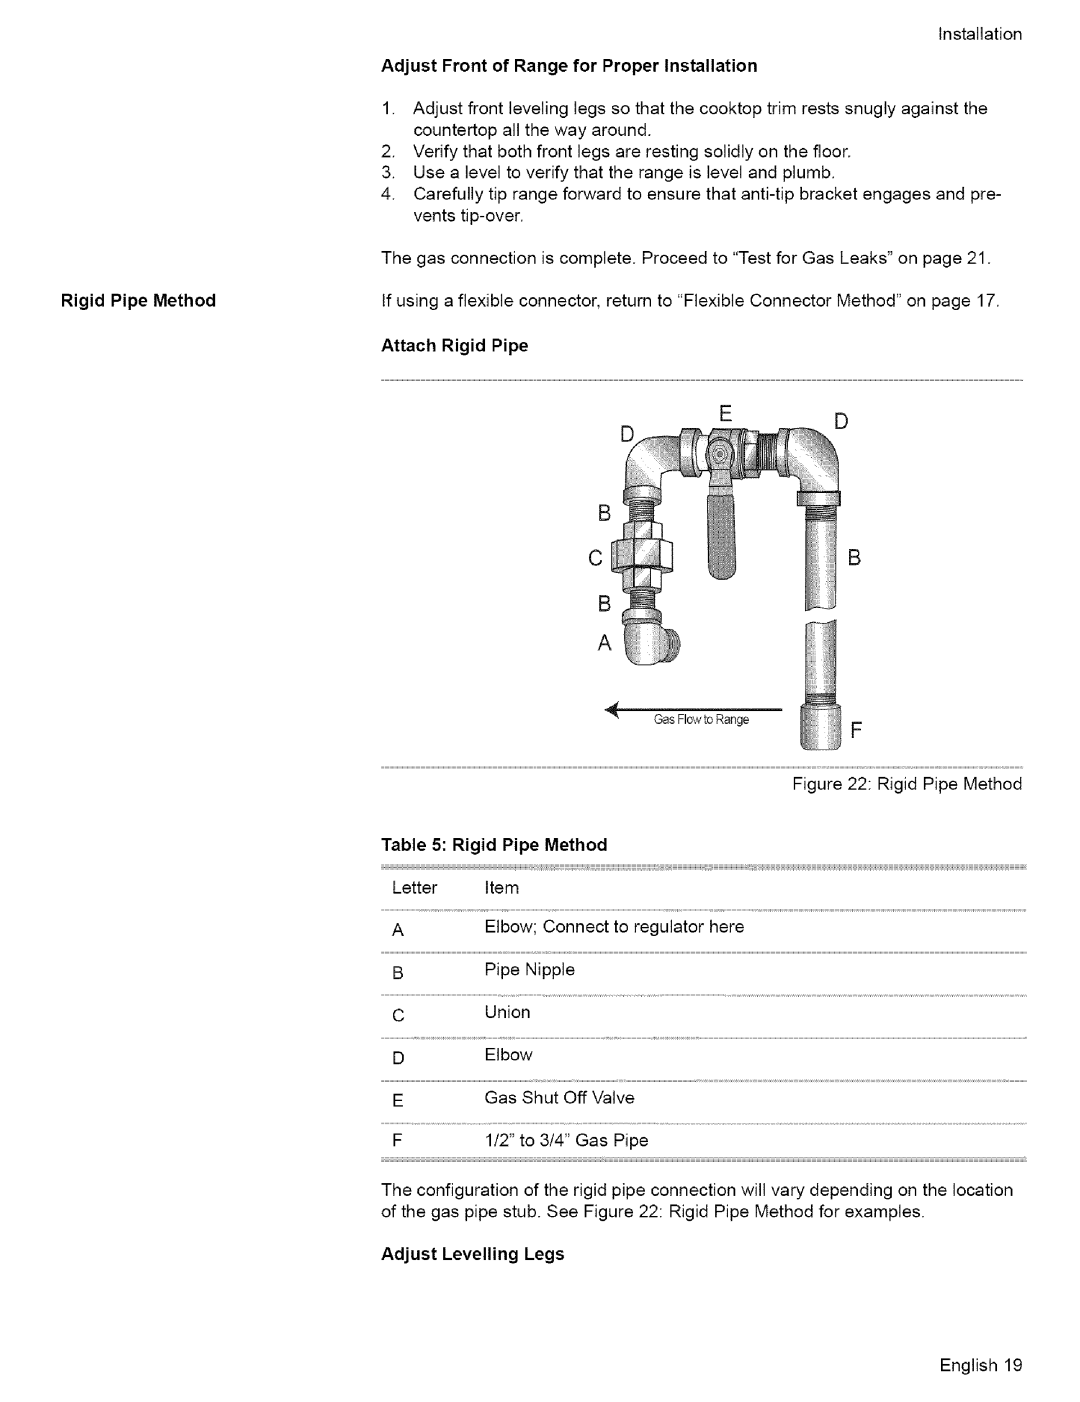 Bosch Appliances L0609466 manual Adjust Front of Range for Proper Installation, Rigid Pipe Method, Attach, Letter 